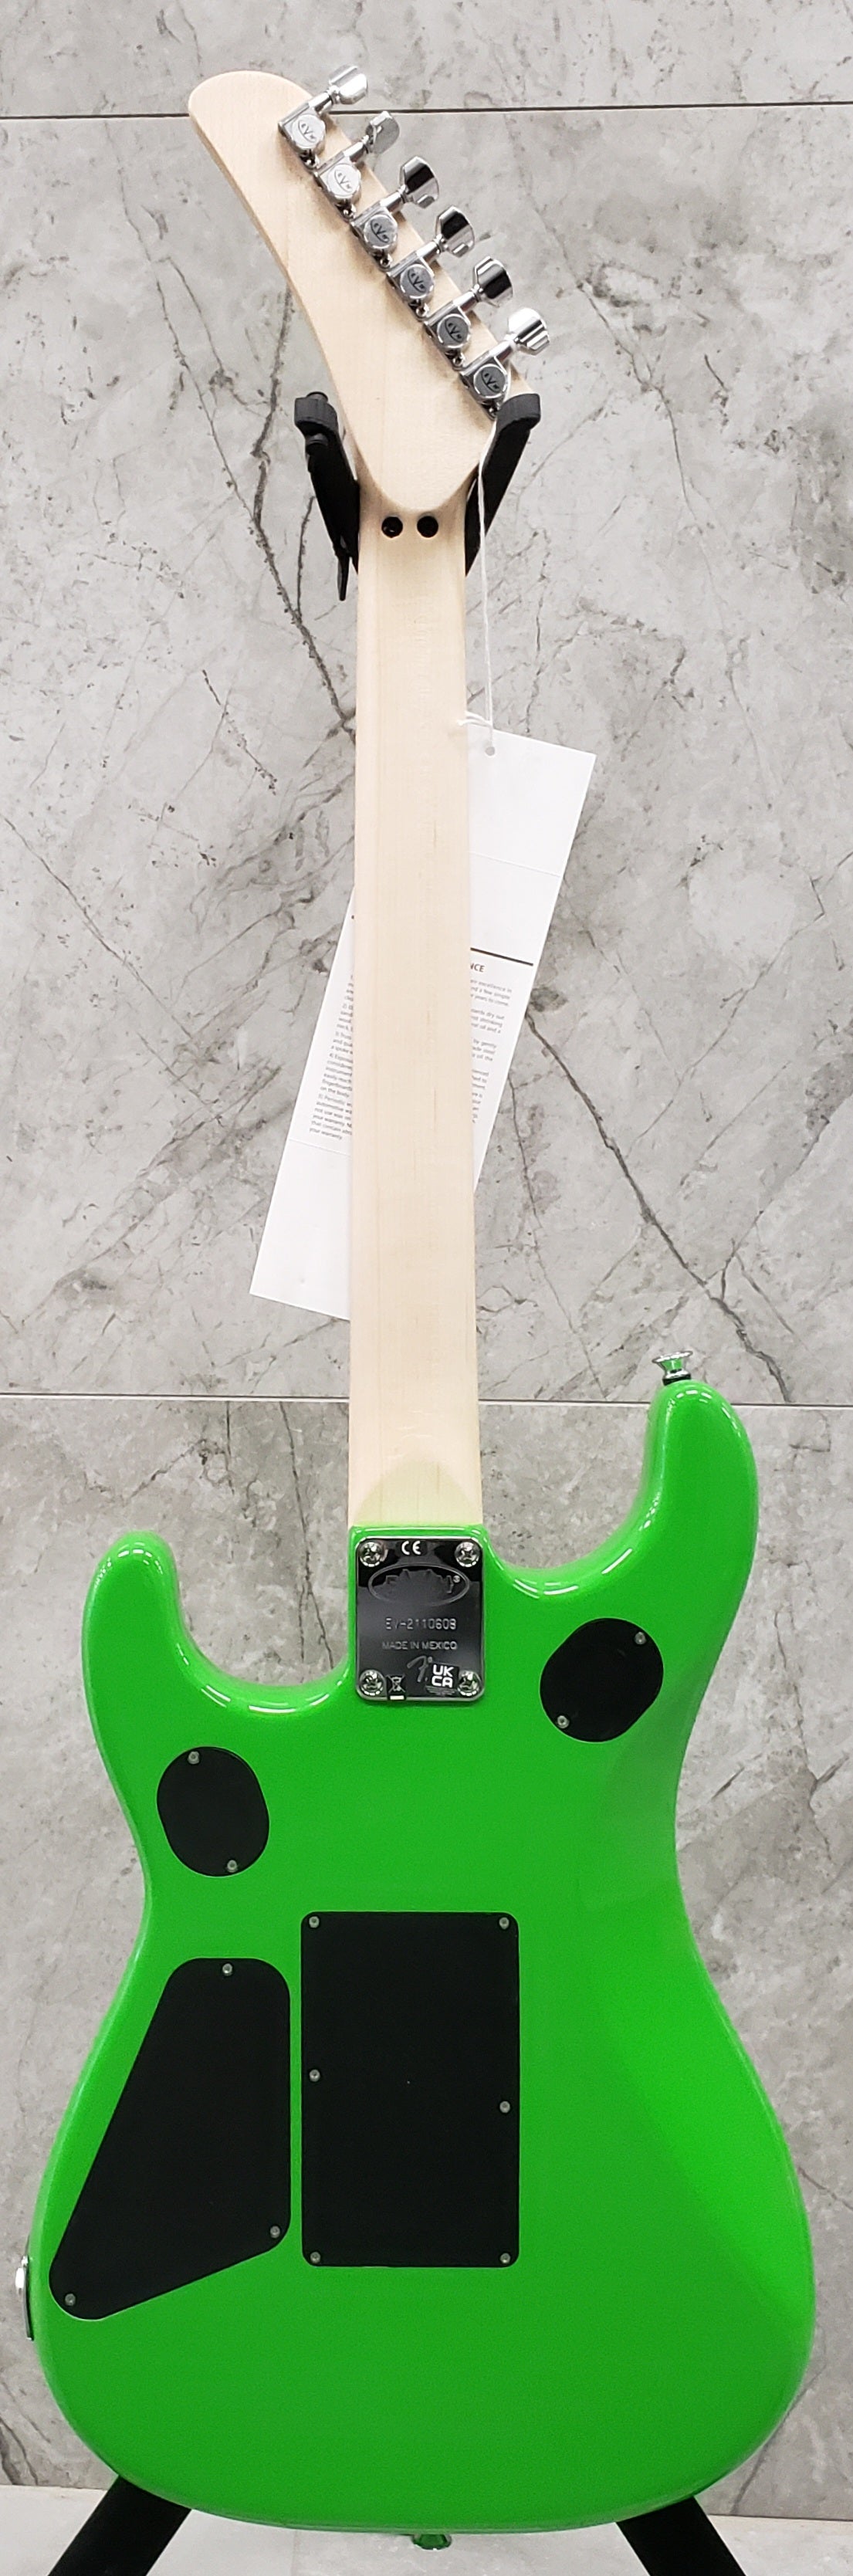 EVH 5150 Series Standard Maple Fingerboard, Slime Green 5108001525